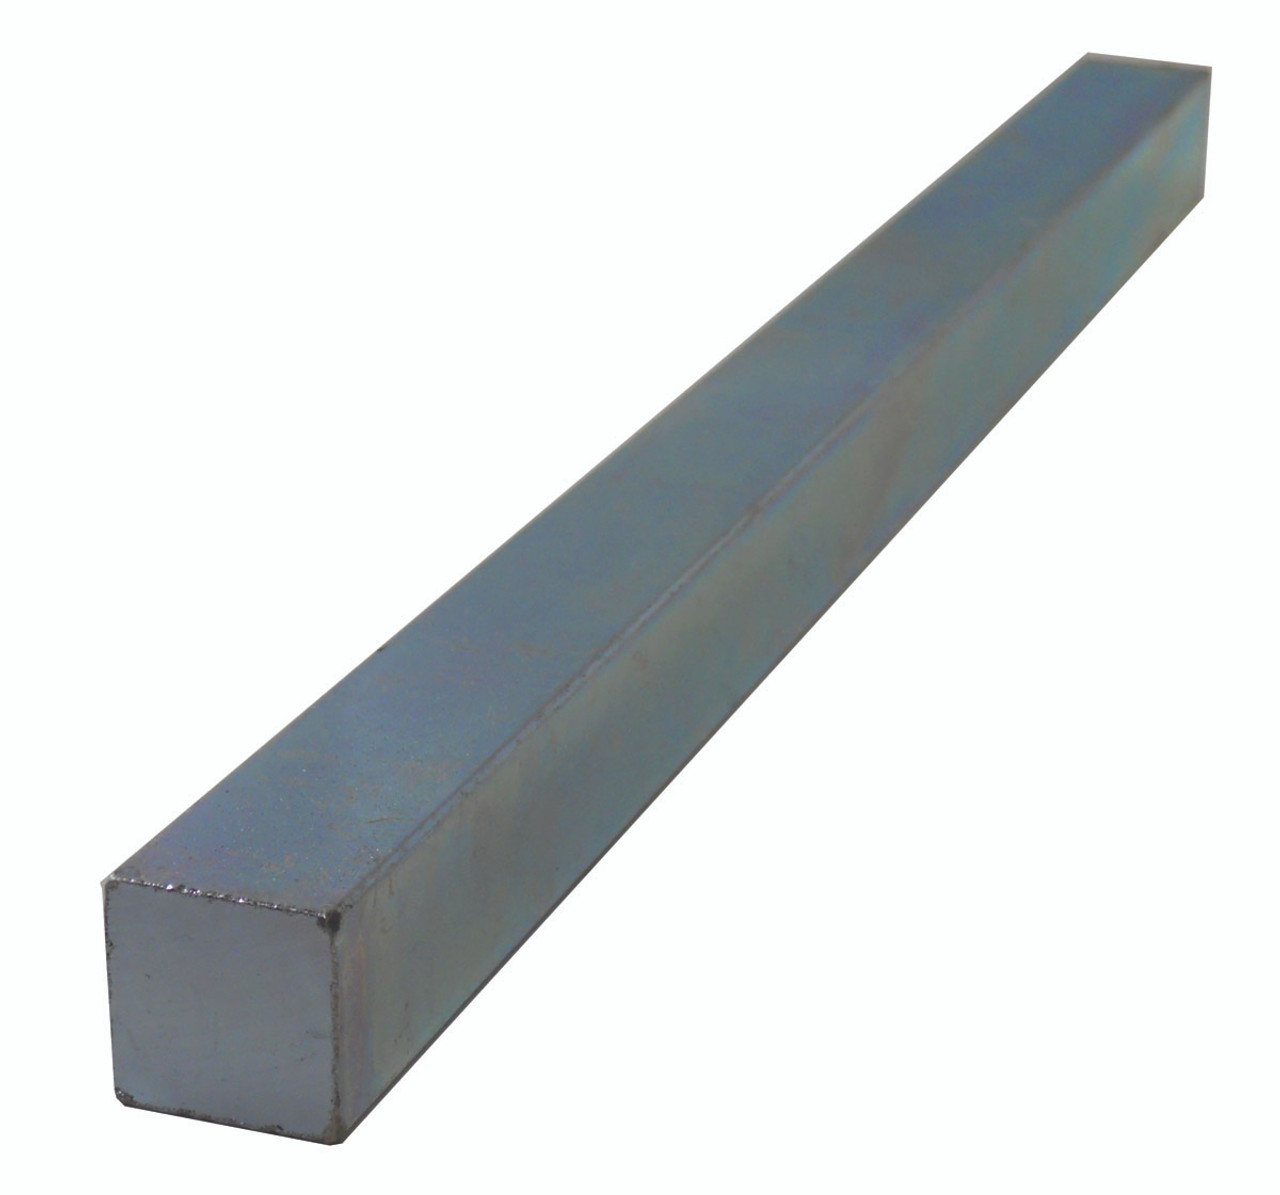 Square SAE 2 x 36" Zinc Plated Steel Keystock  2.000-36